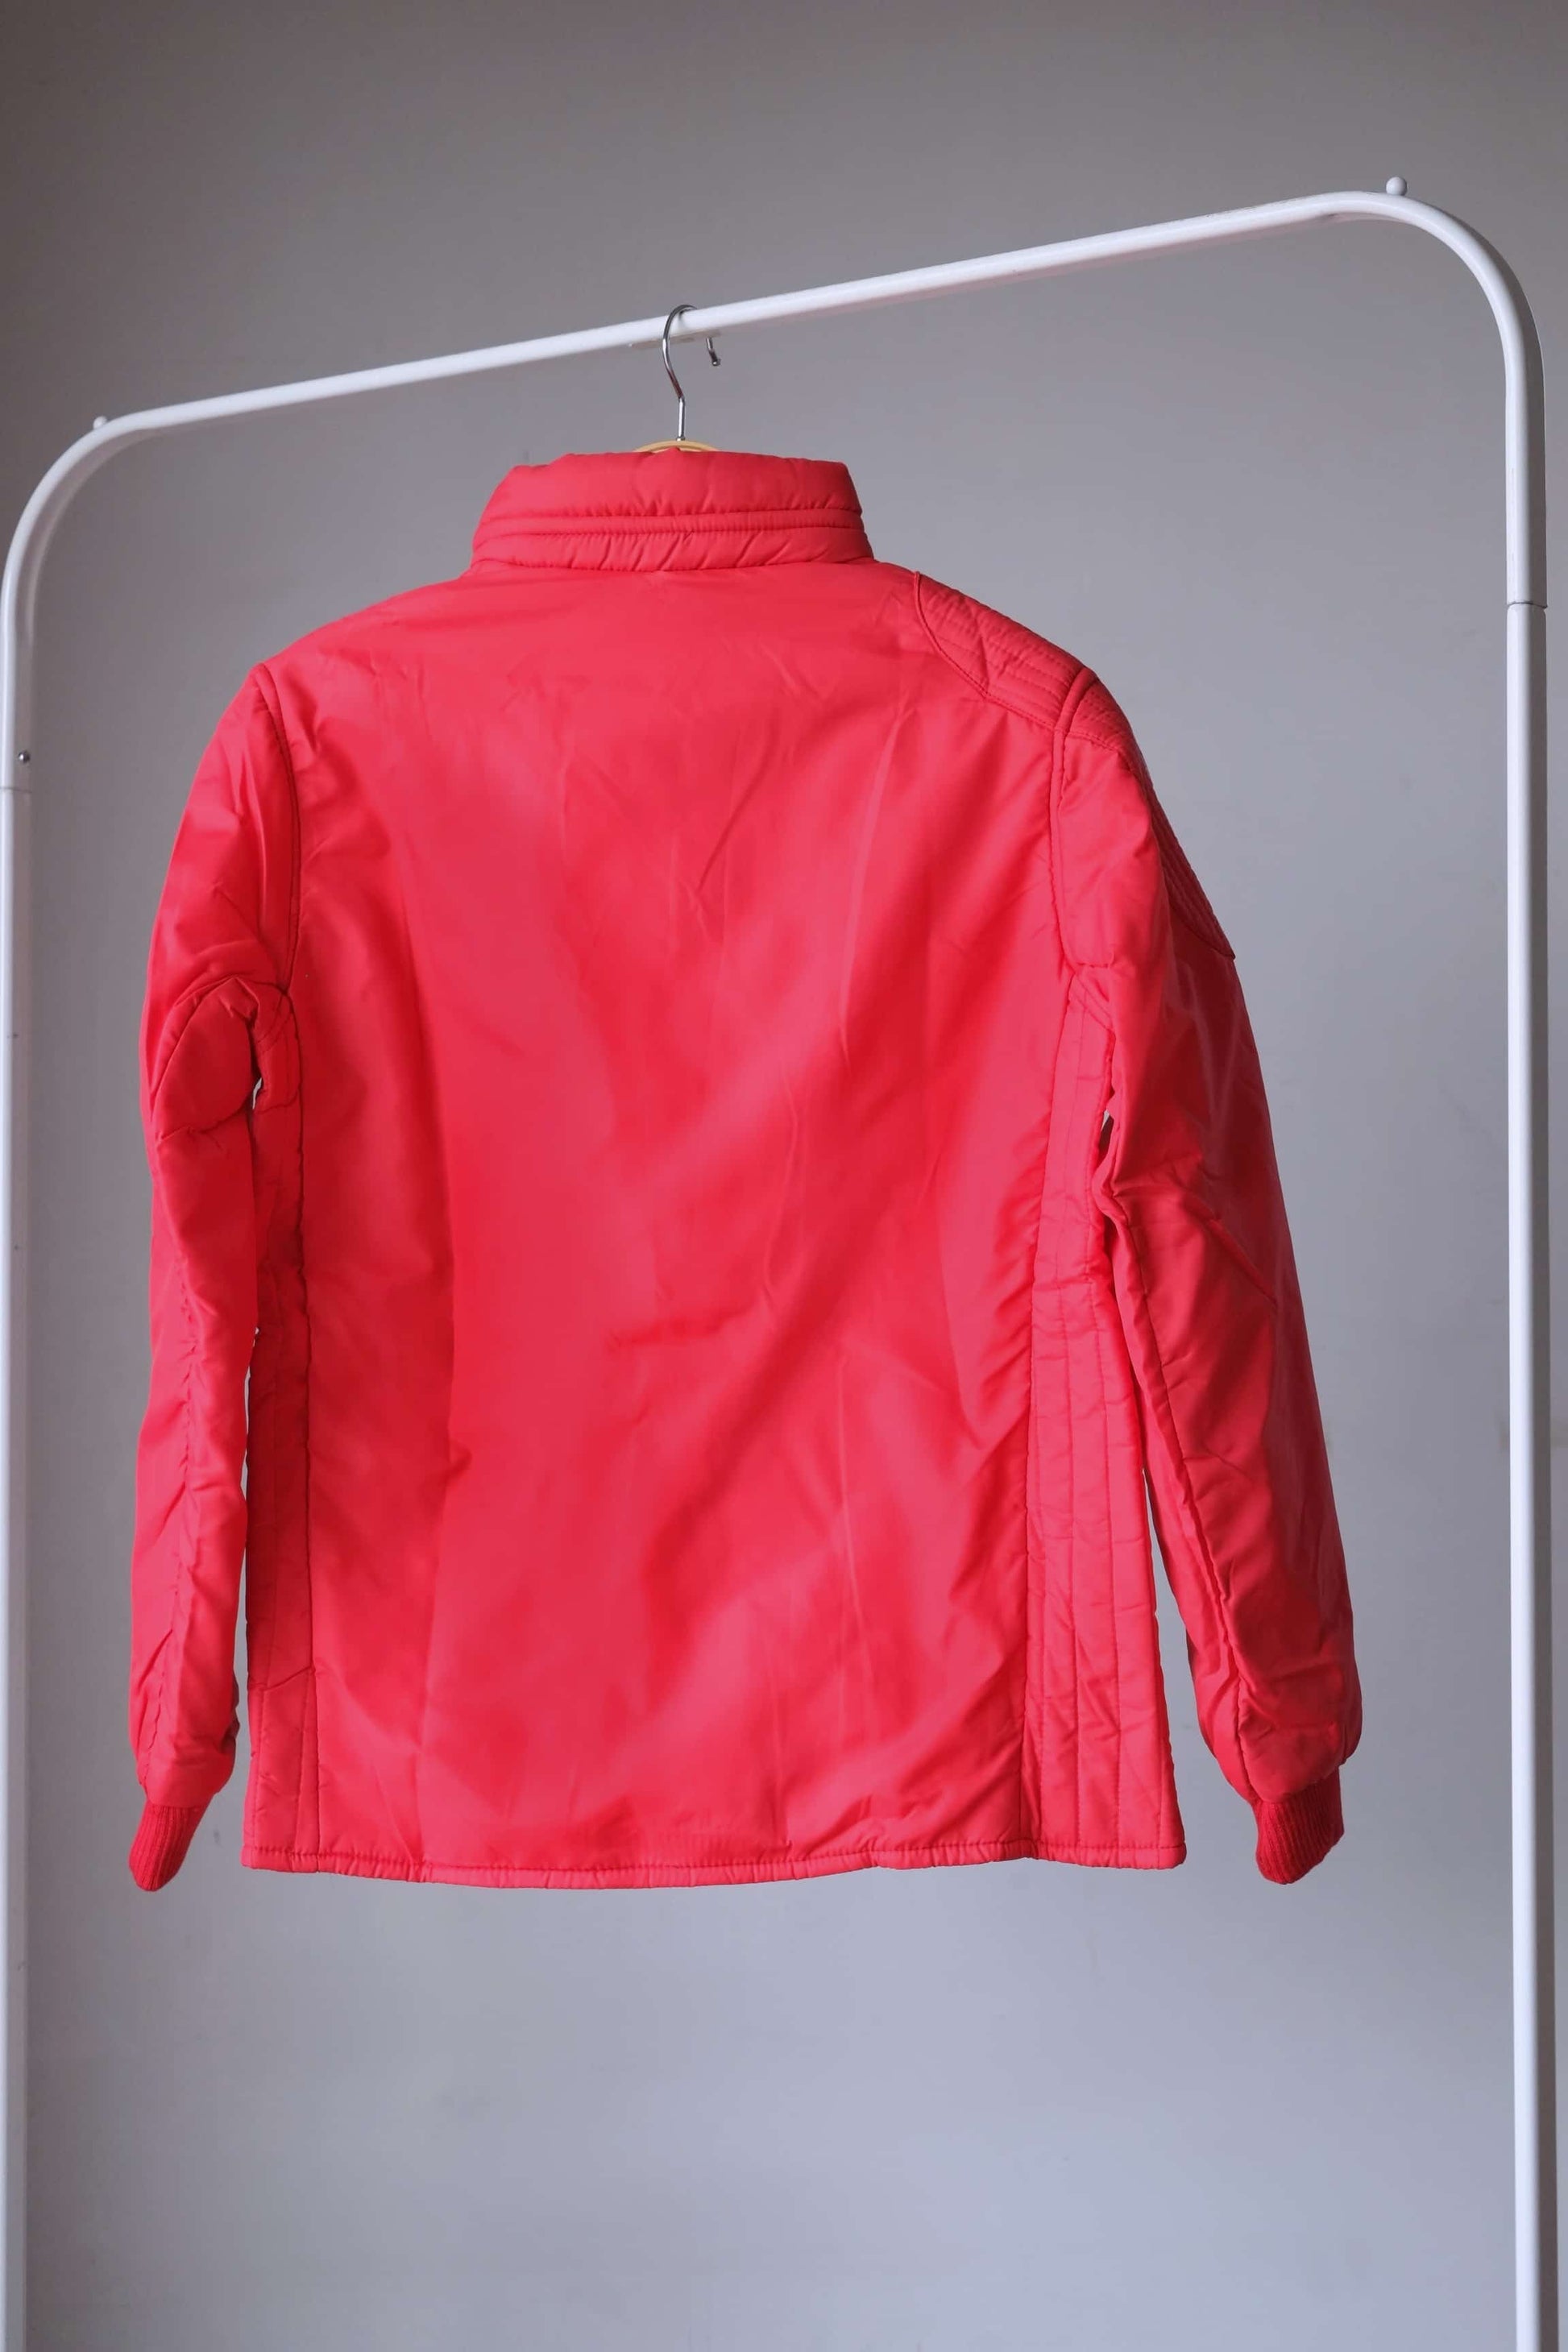 Backview of red jacket of Vintage Men's 70's Ski Suit